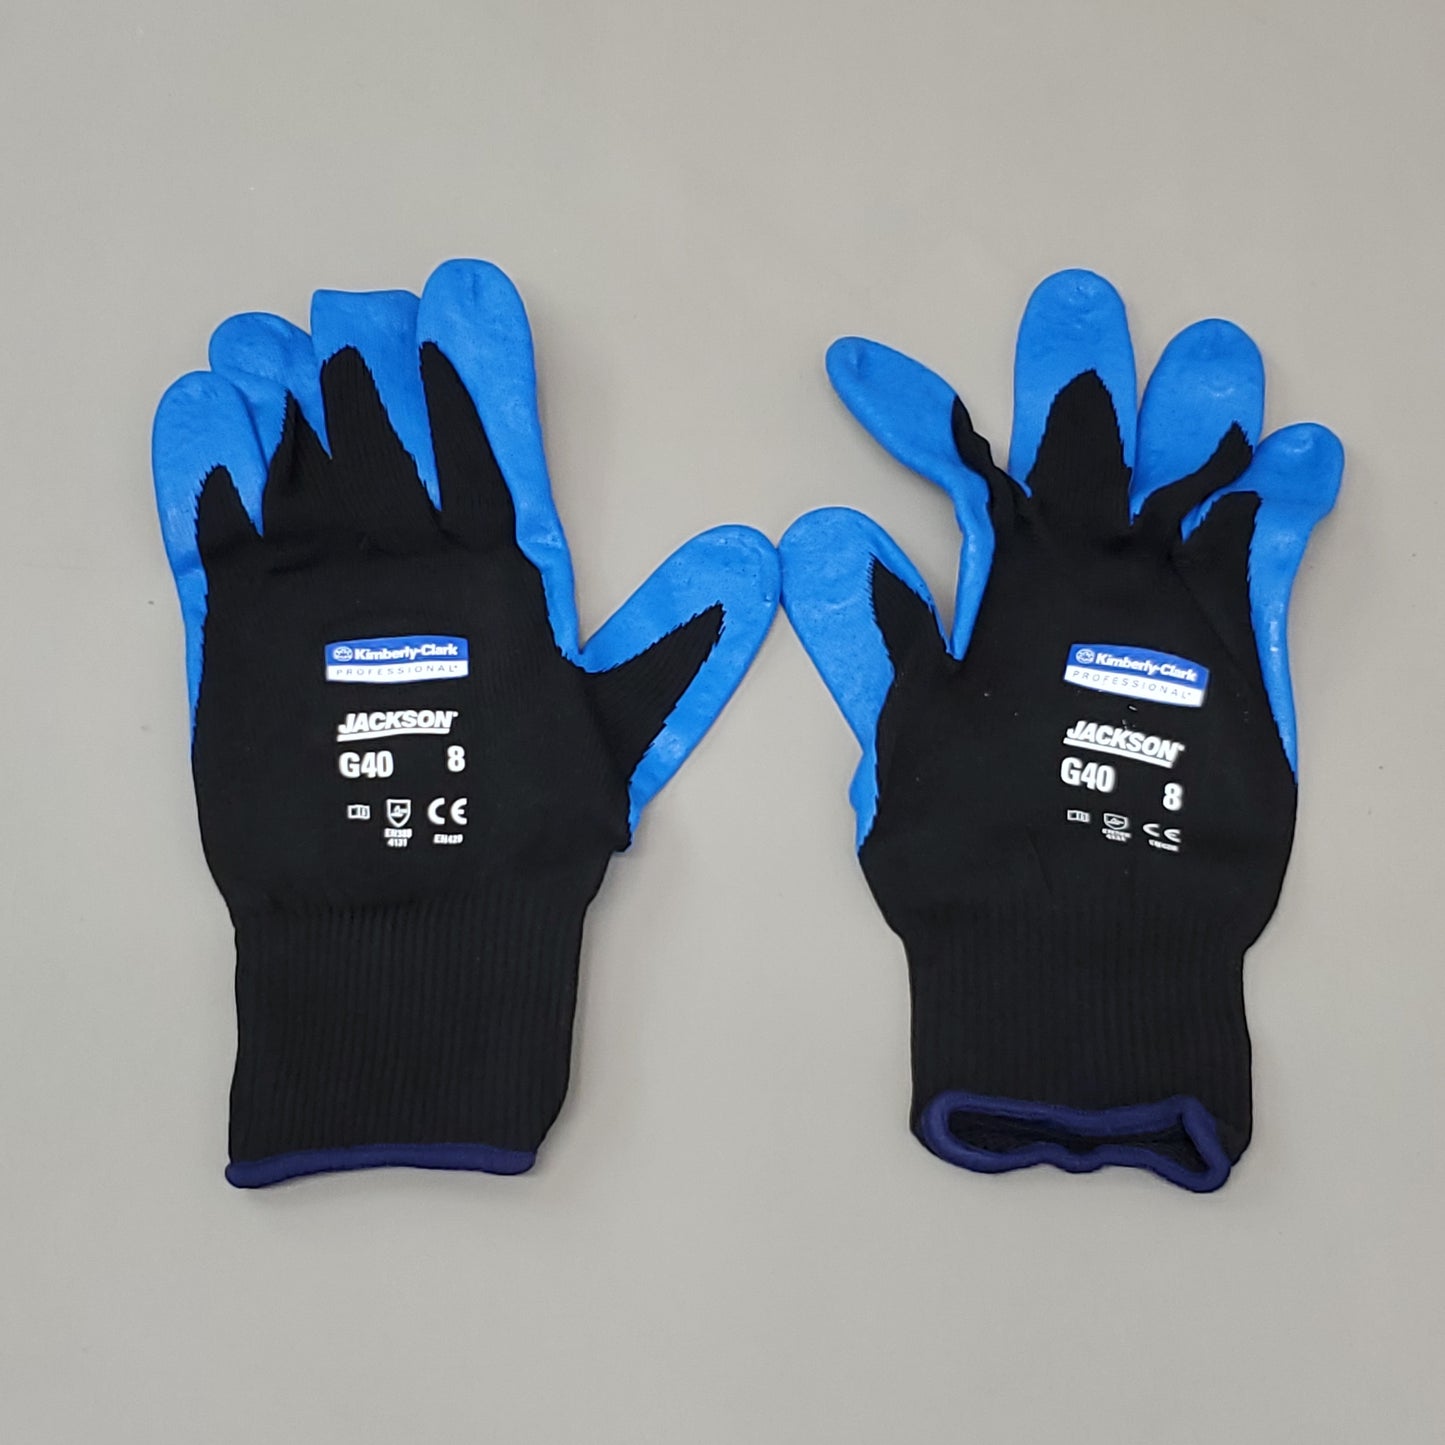 JACKSON 60 Pairs of Foam Nitrile Coated Gloves Blue / Black Sz M G40 40511 (New)